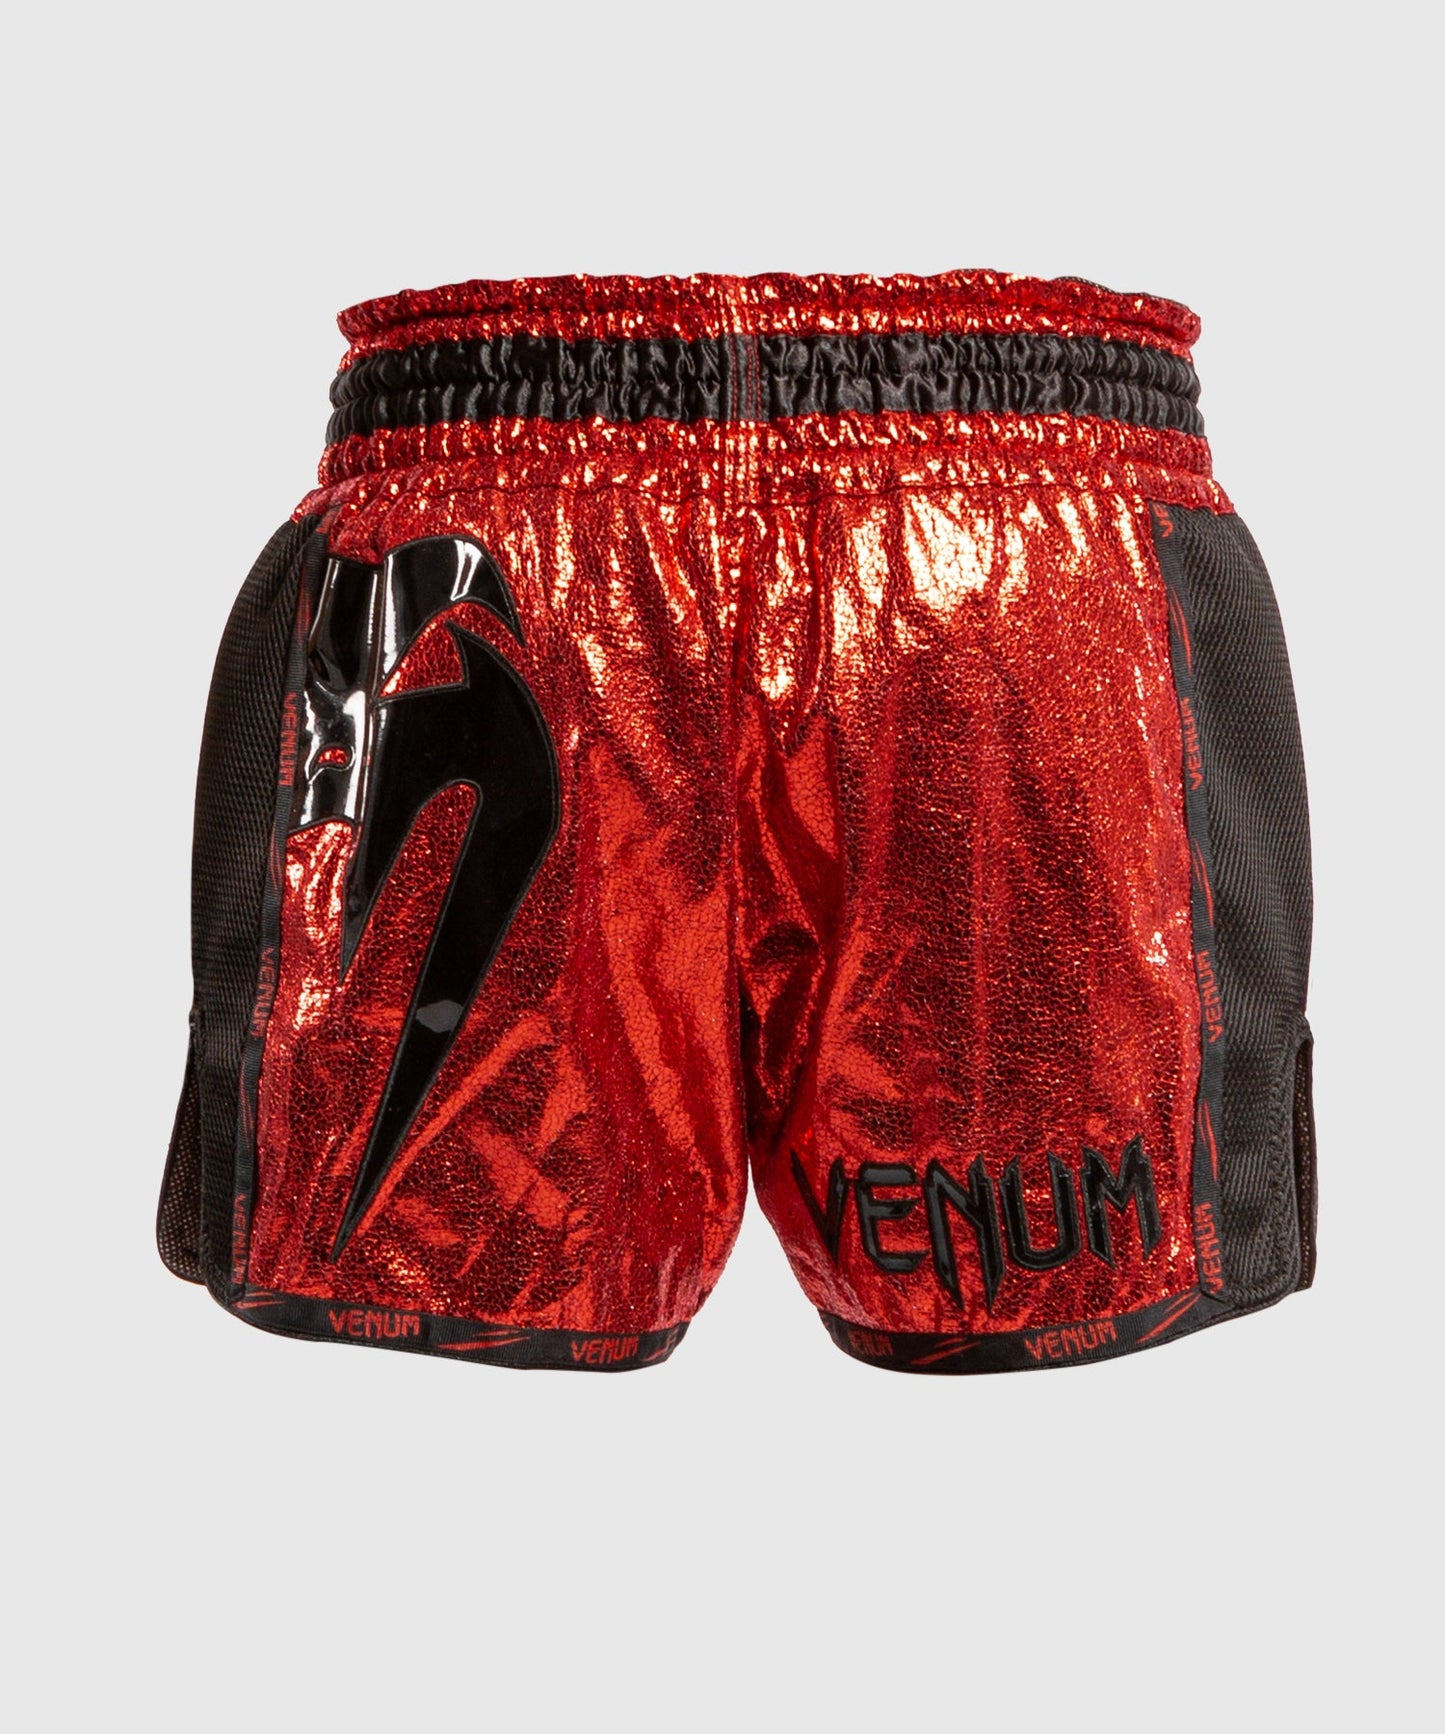 Venum Giant Foil Muay Thai Shorts - Red/Black